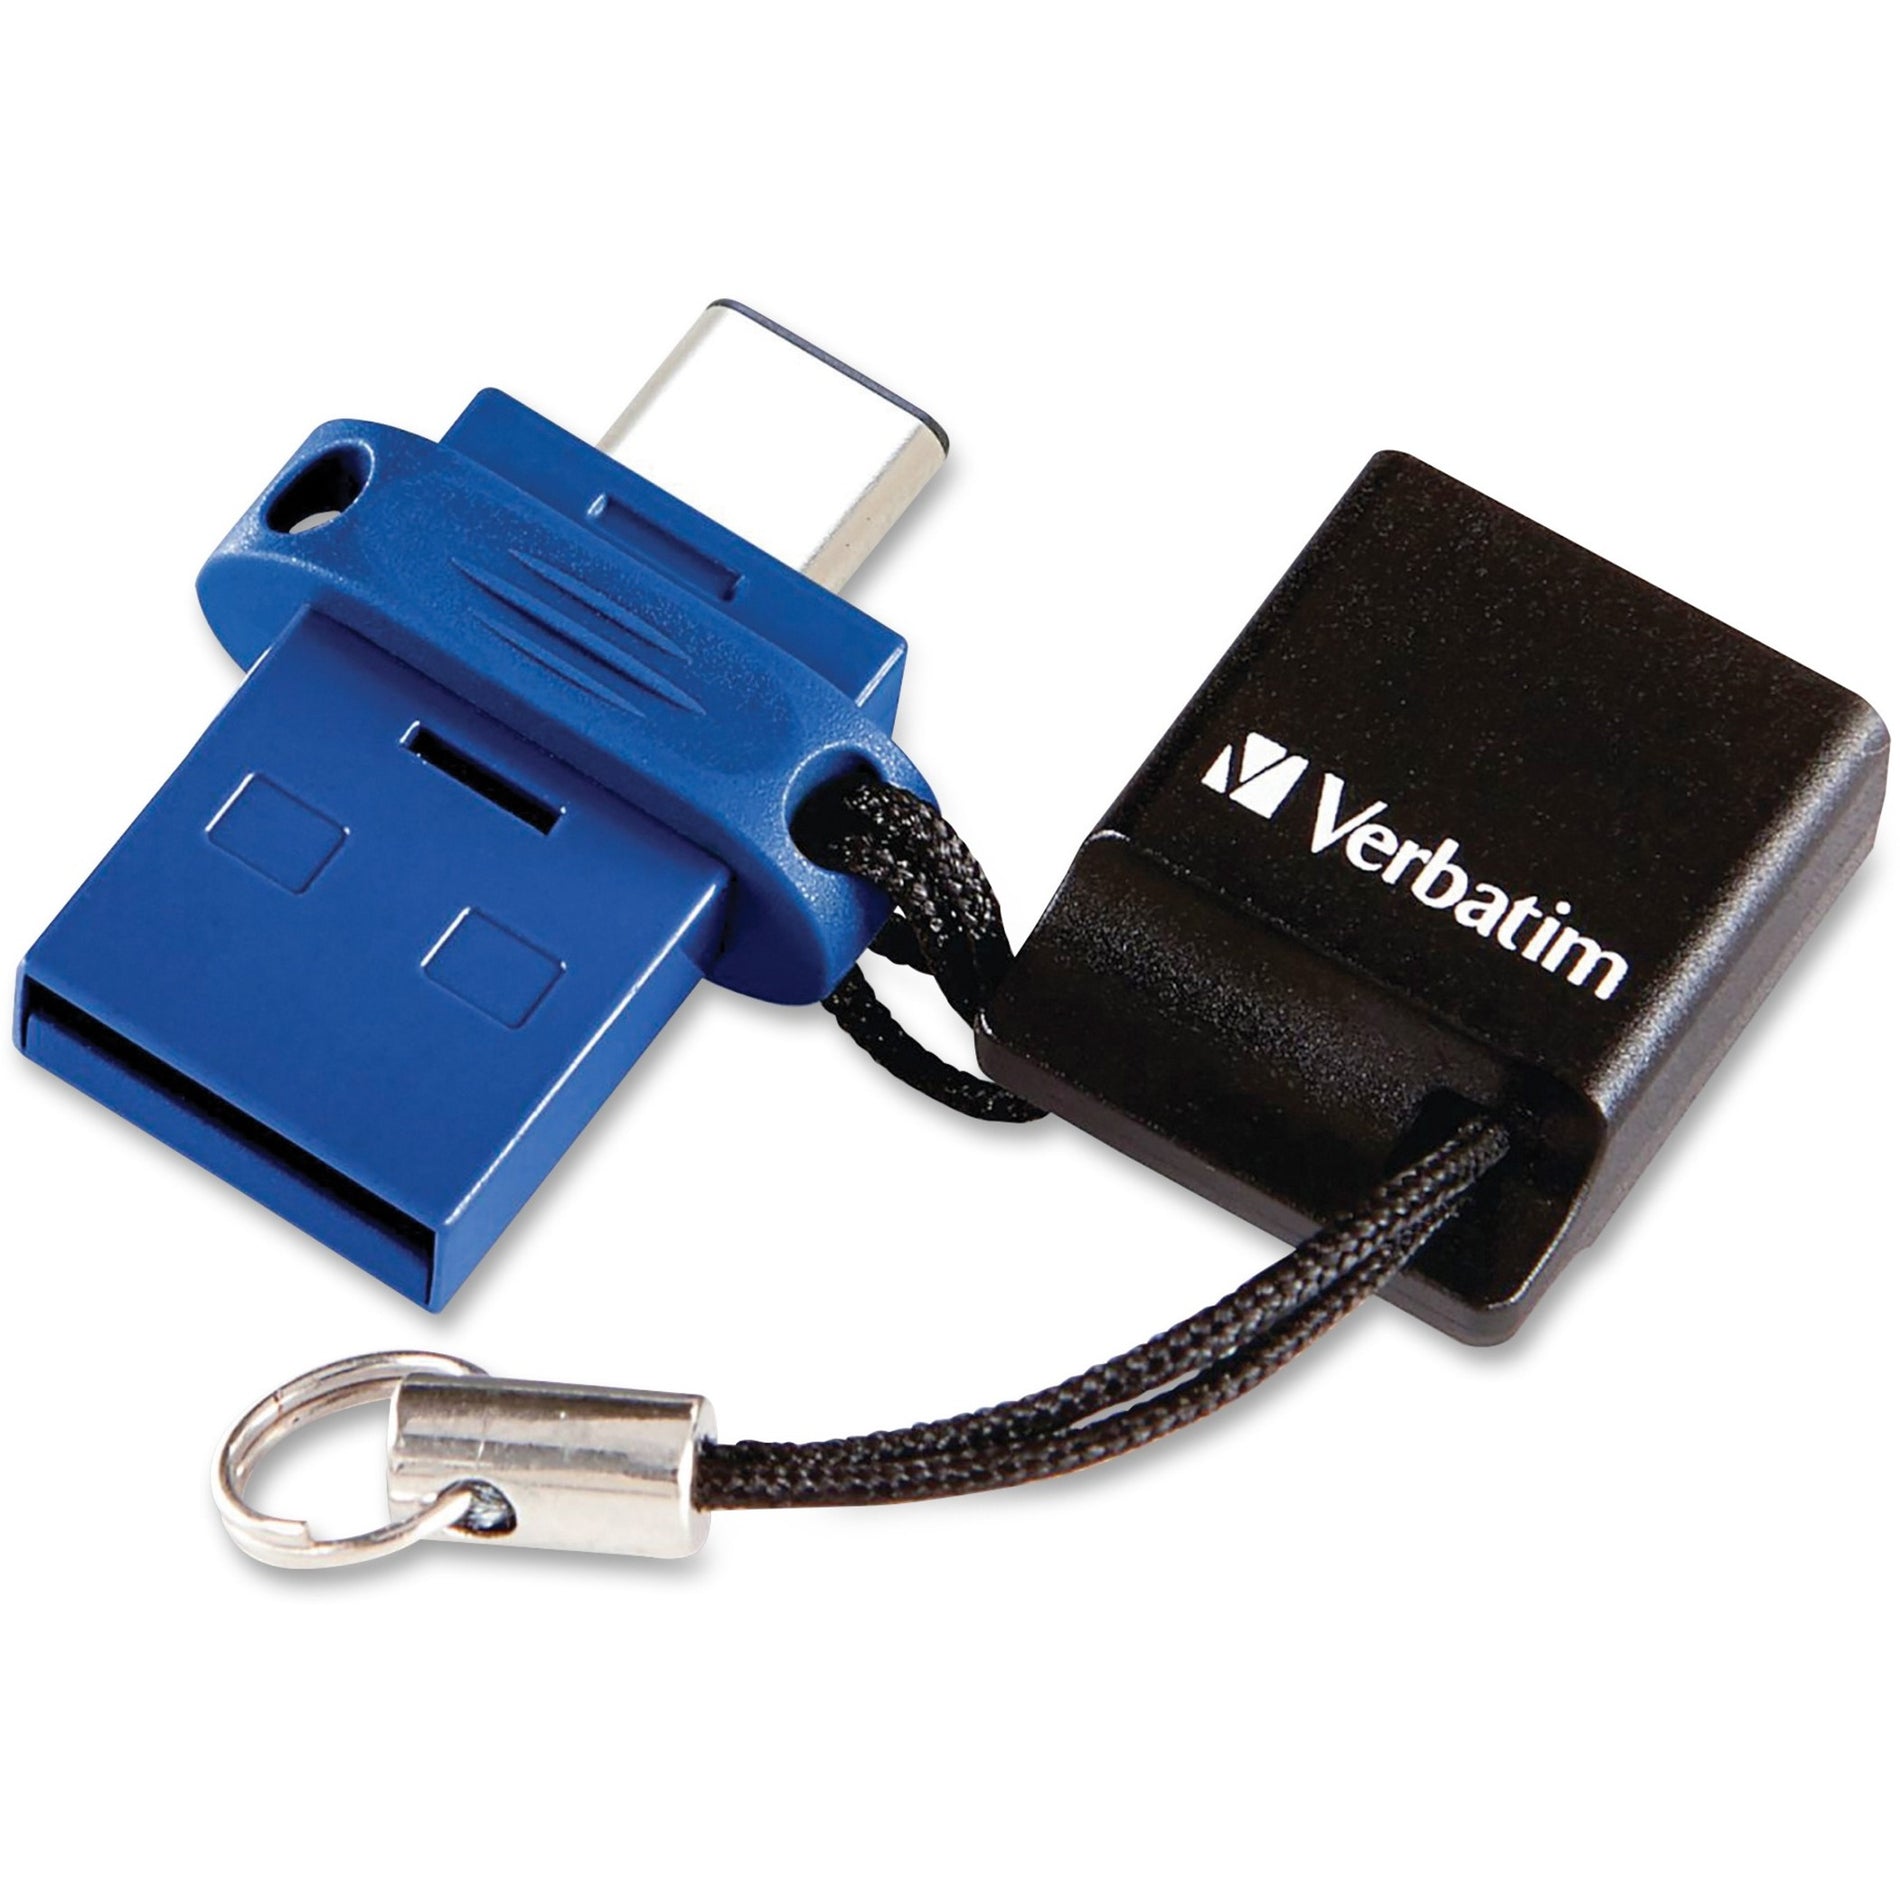 Microban 99153 Store 'n' Go Dual USB 3.2 Gen 1 Flash Drive, 16GB, Blue